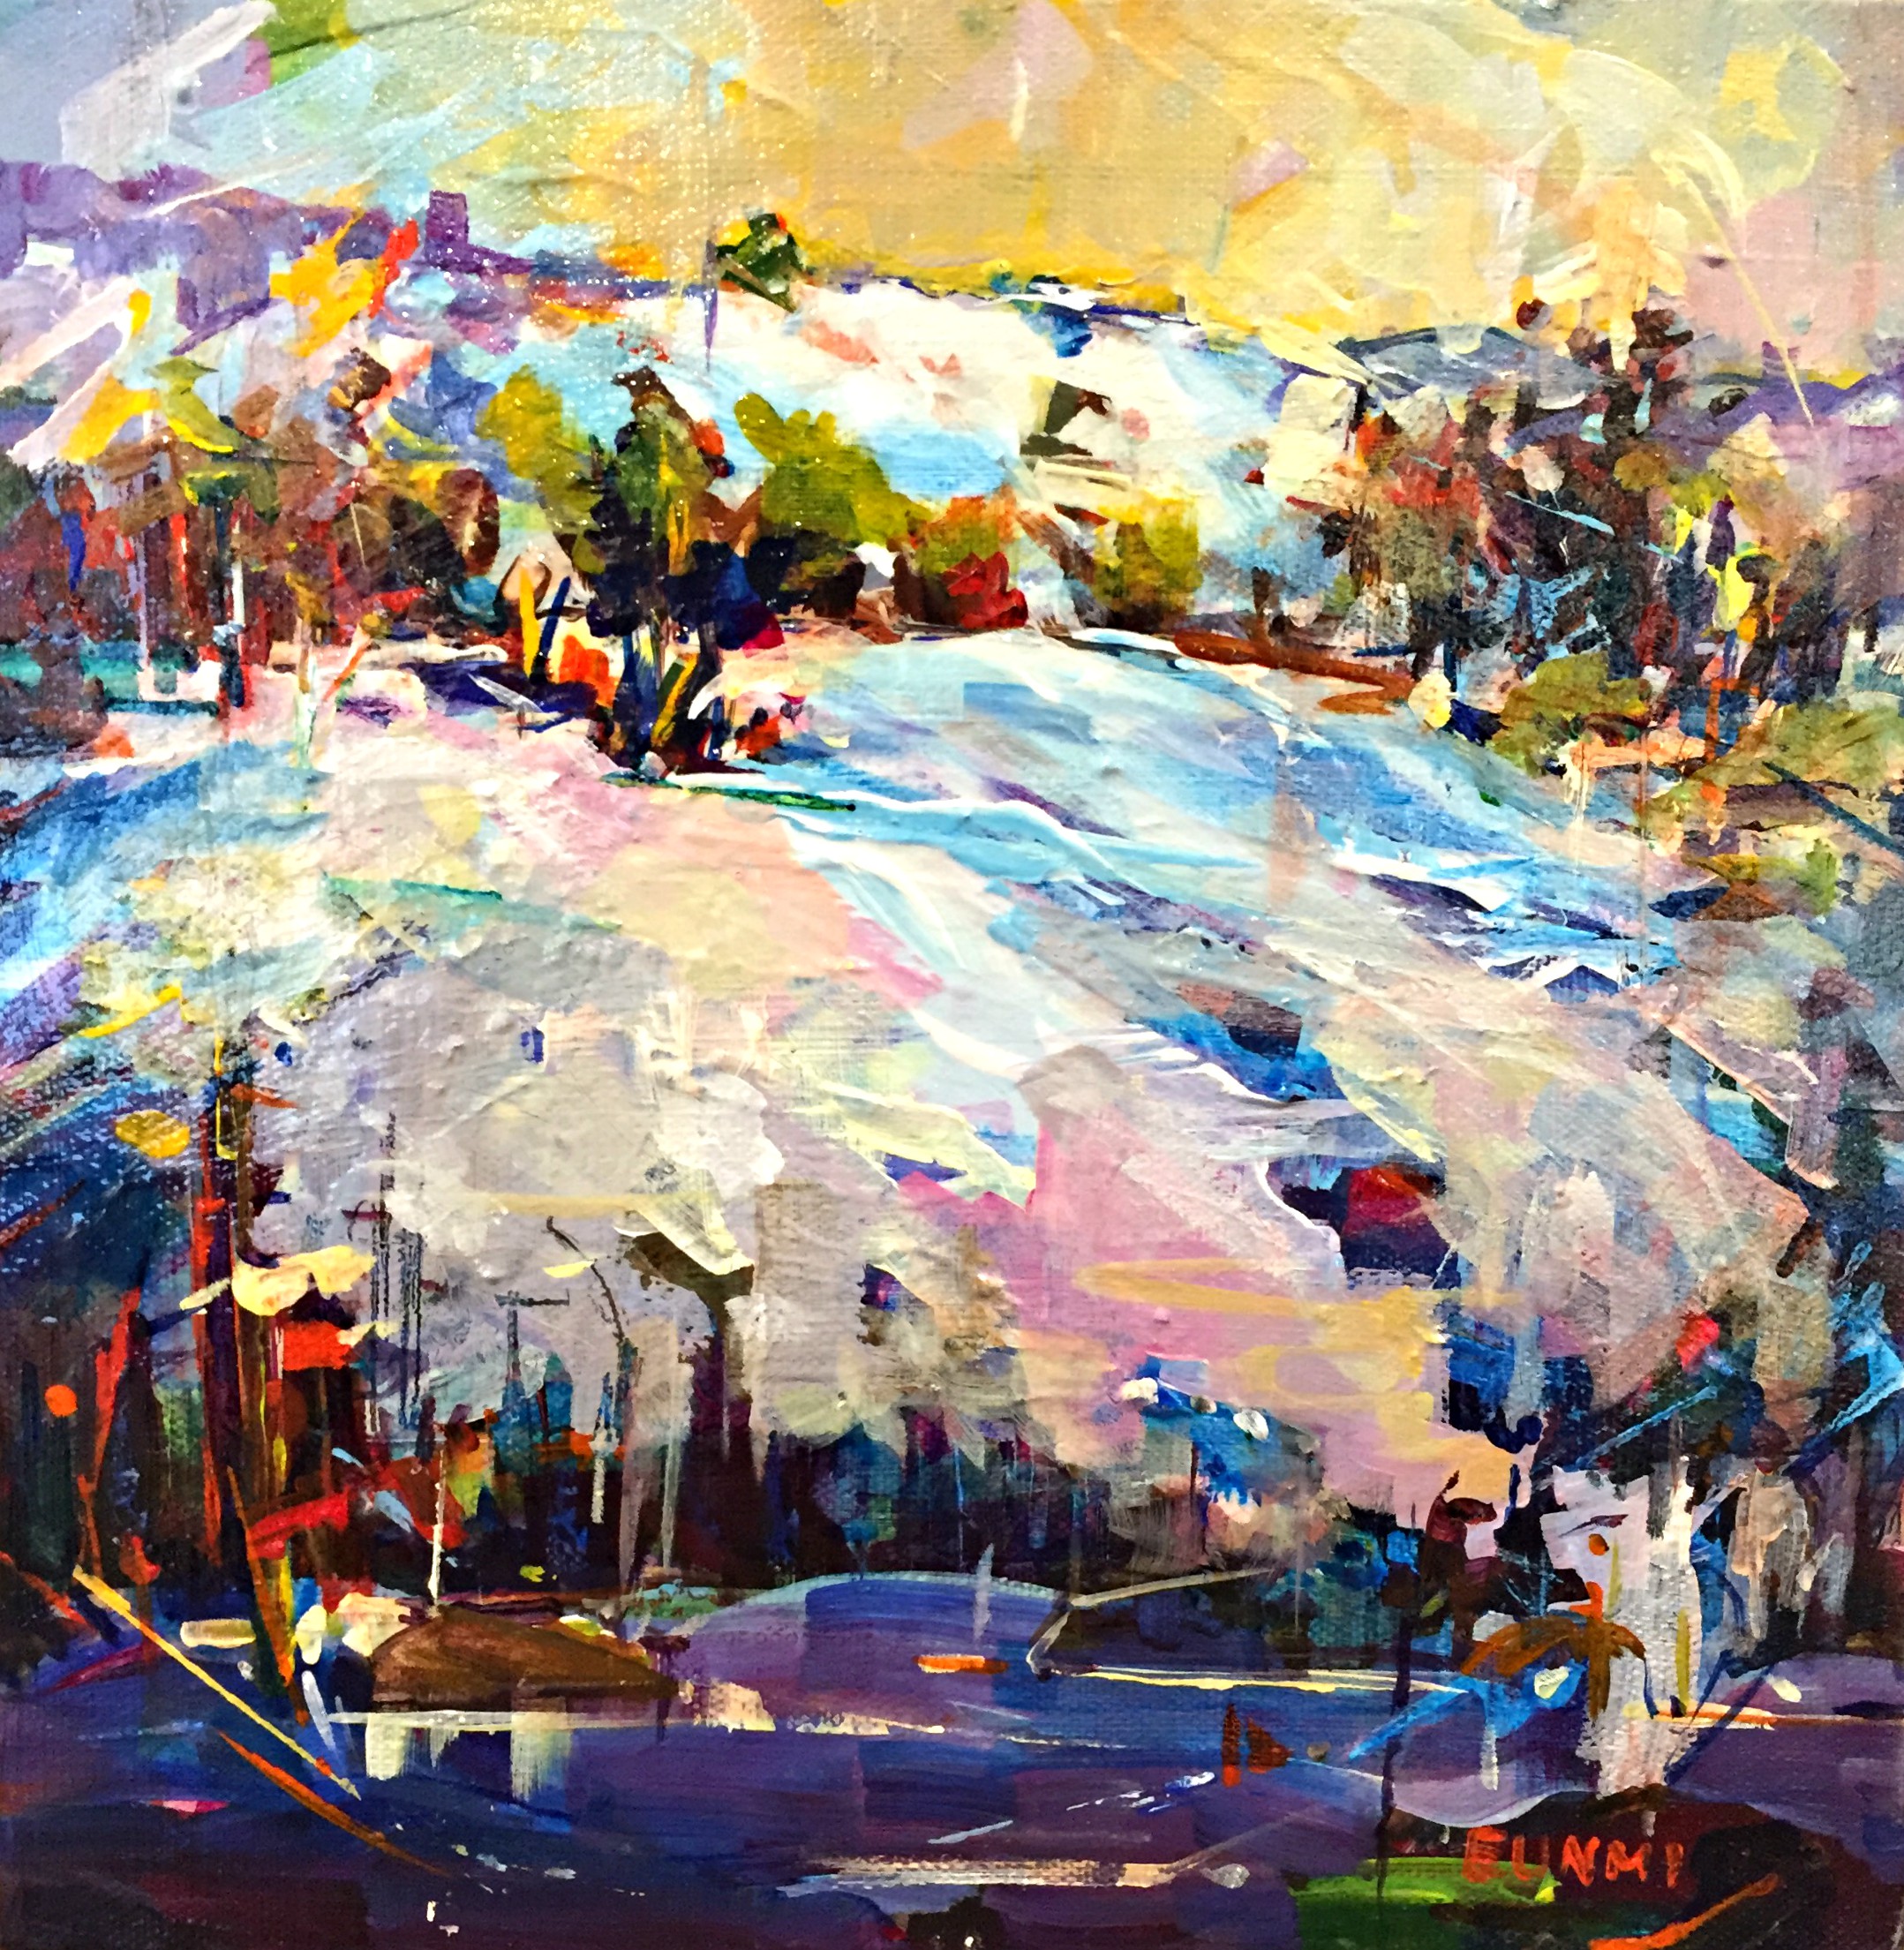 Winter Mountain acrylic painting by Eunmi Conacher | Effusion Art Gallery + Cast Glass Studio, Invermere BC